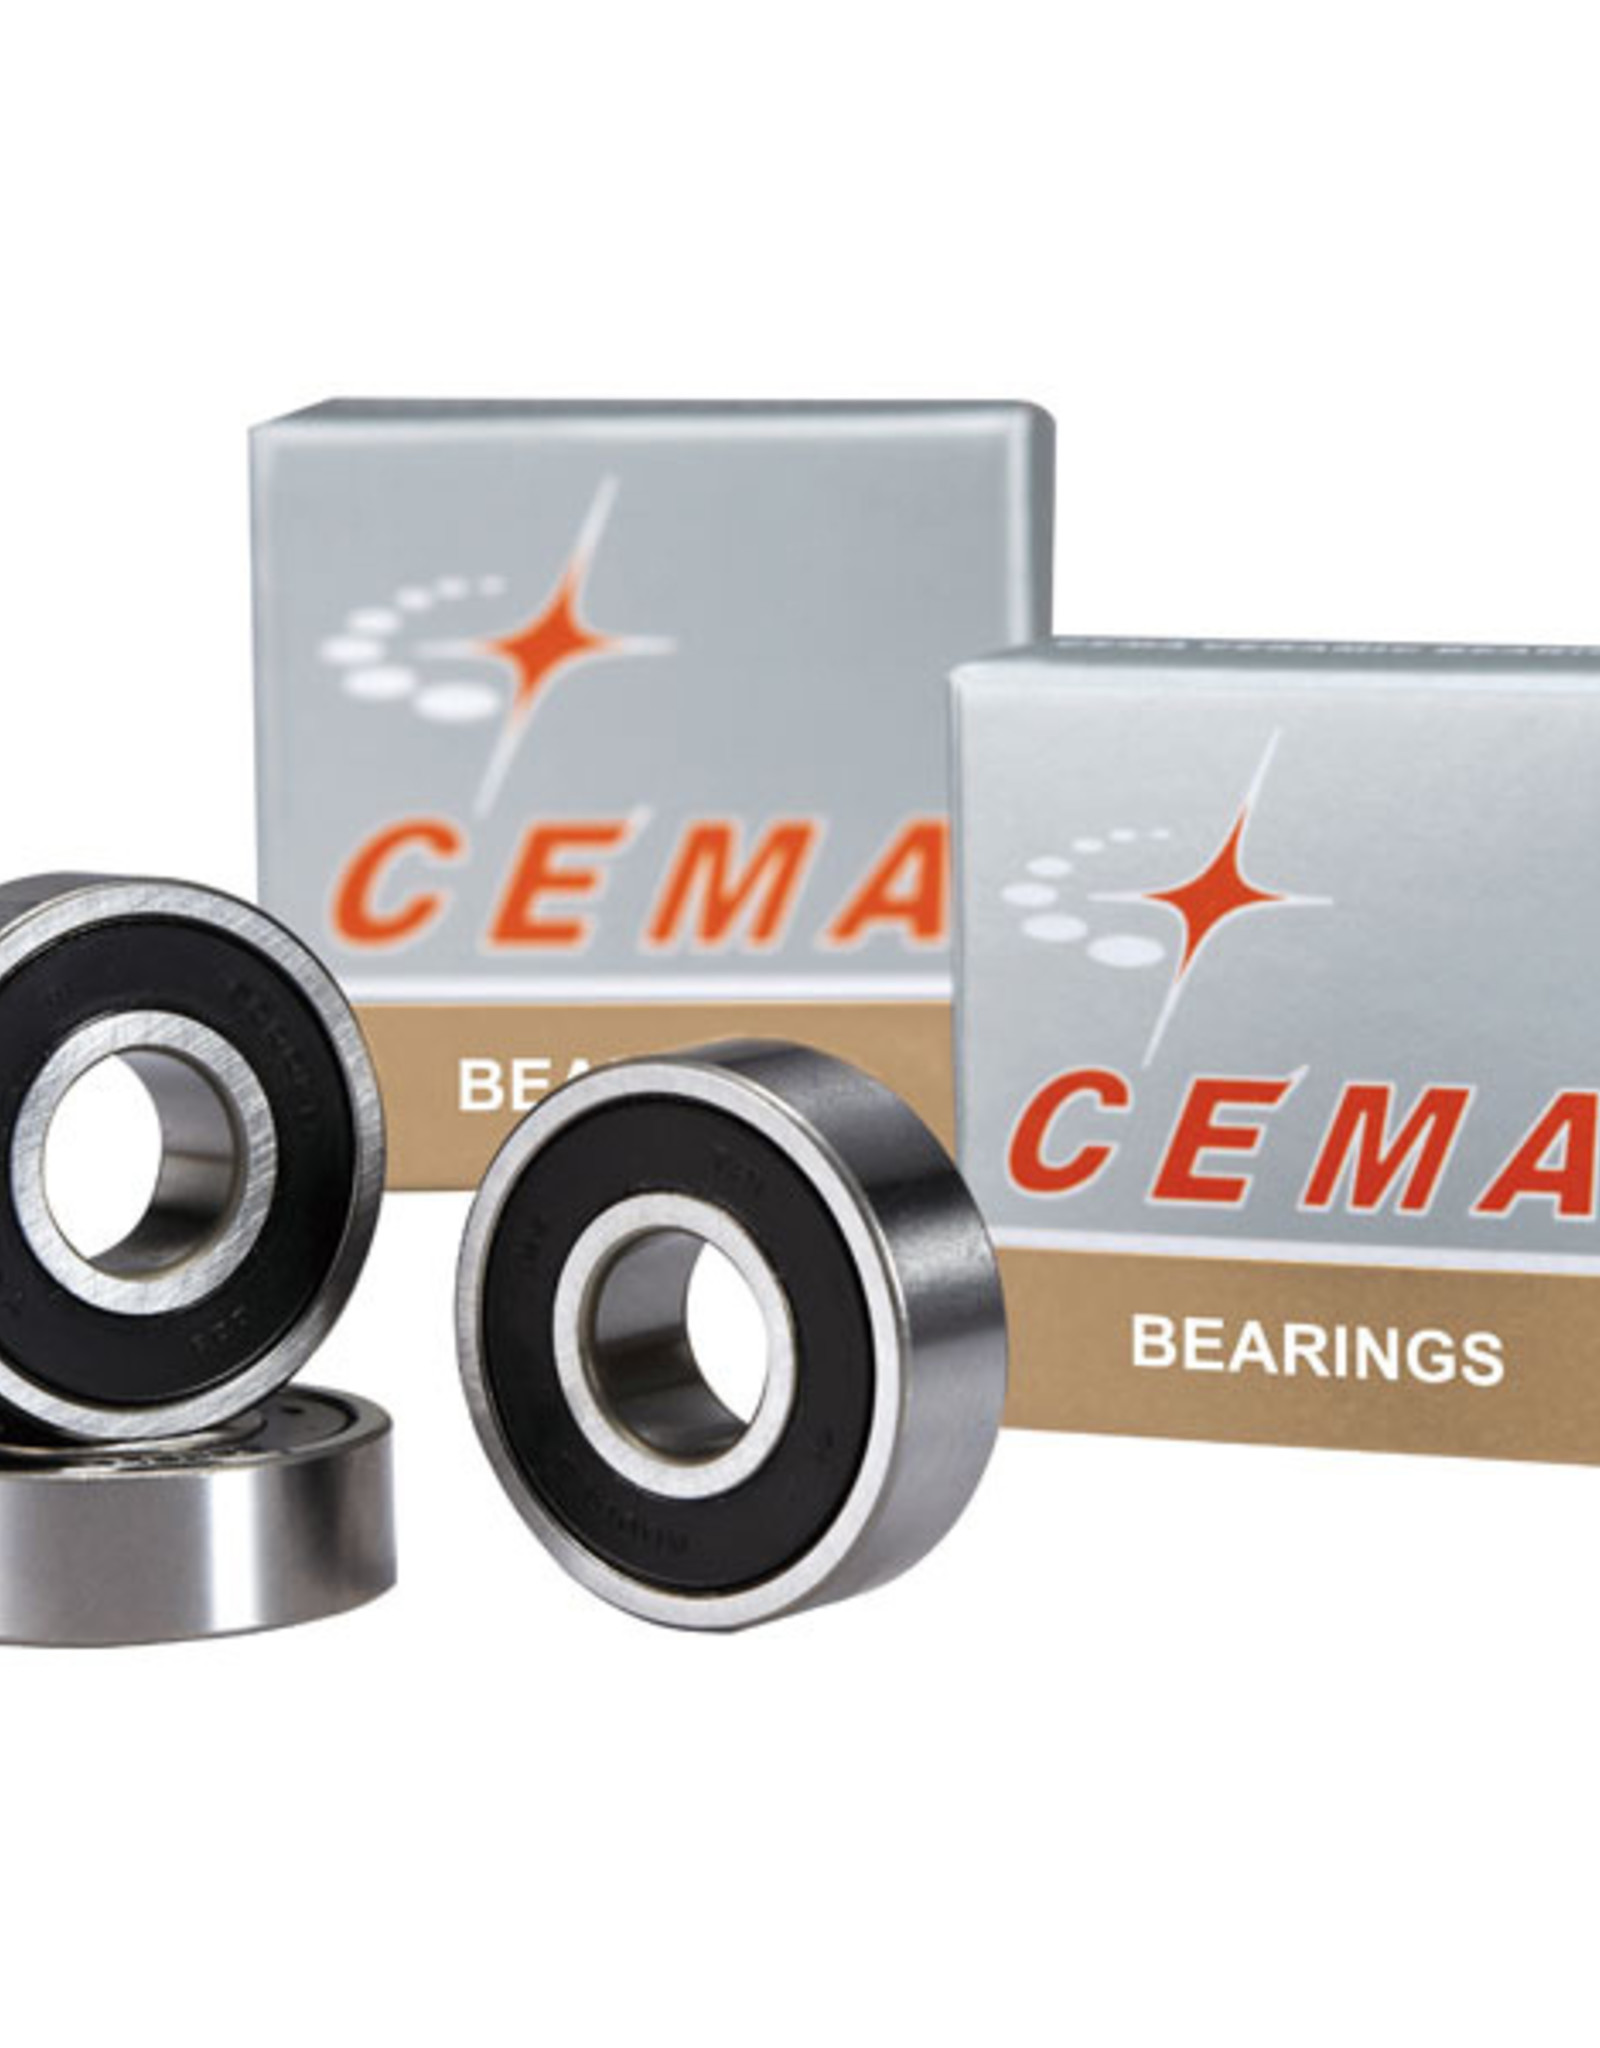 Cema Chrome Steel Headset Bearing (46.9 x 34.1 x 7mm)